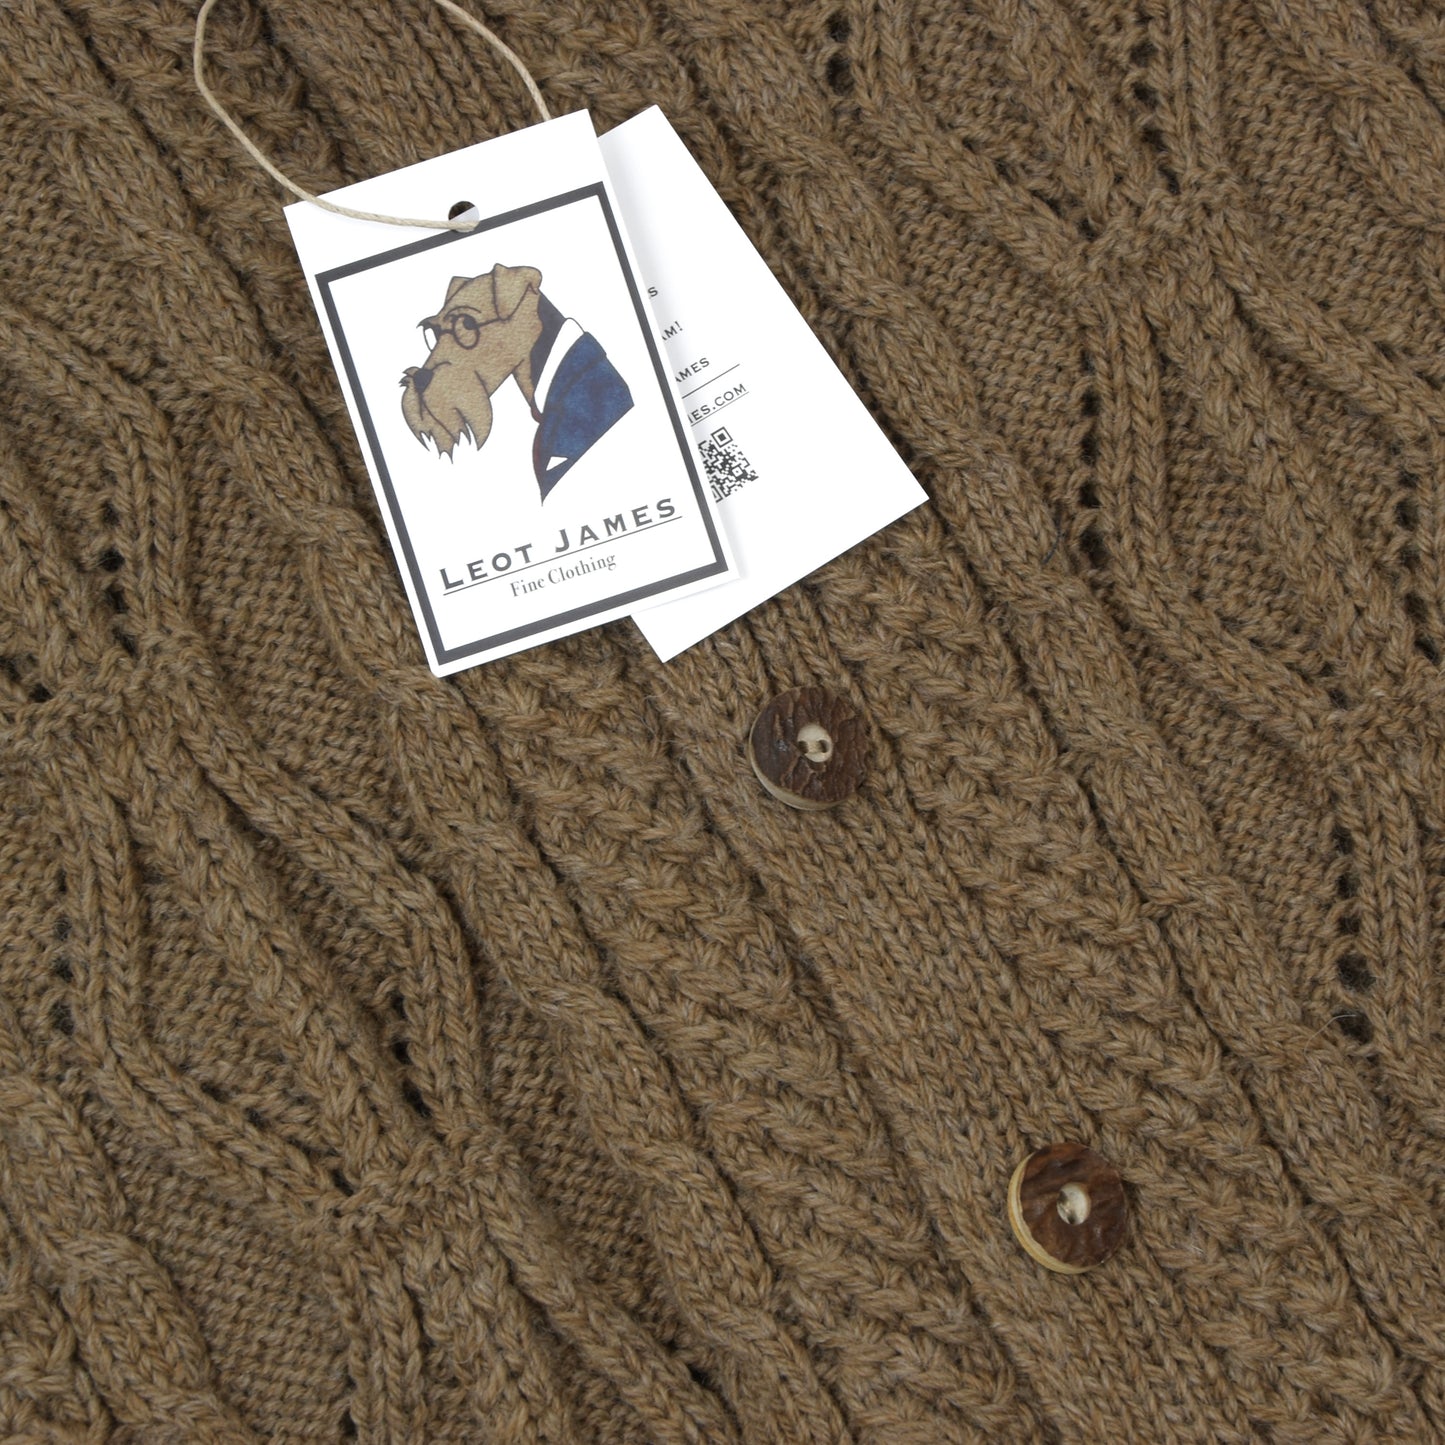 Classic Handknit Trachten Alpaca Wool Cardigan Sweater/Trachtenweste Chest ca. 52.5cm - Brown